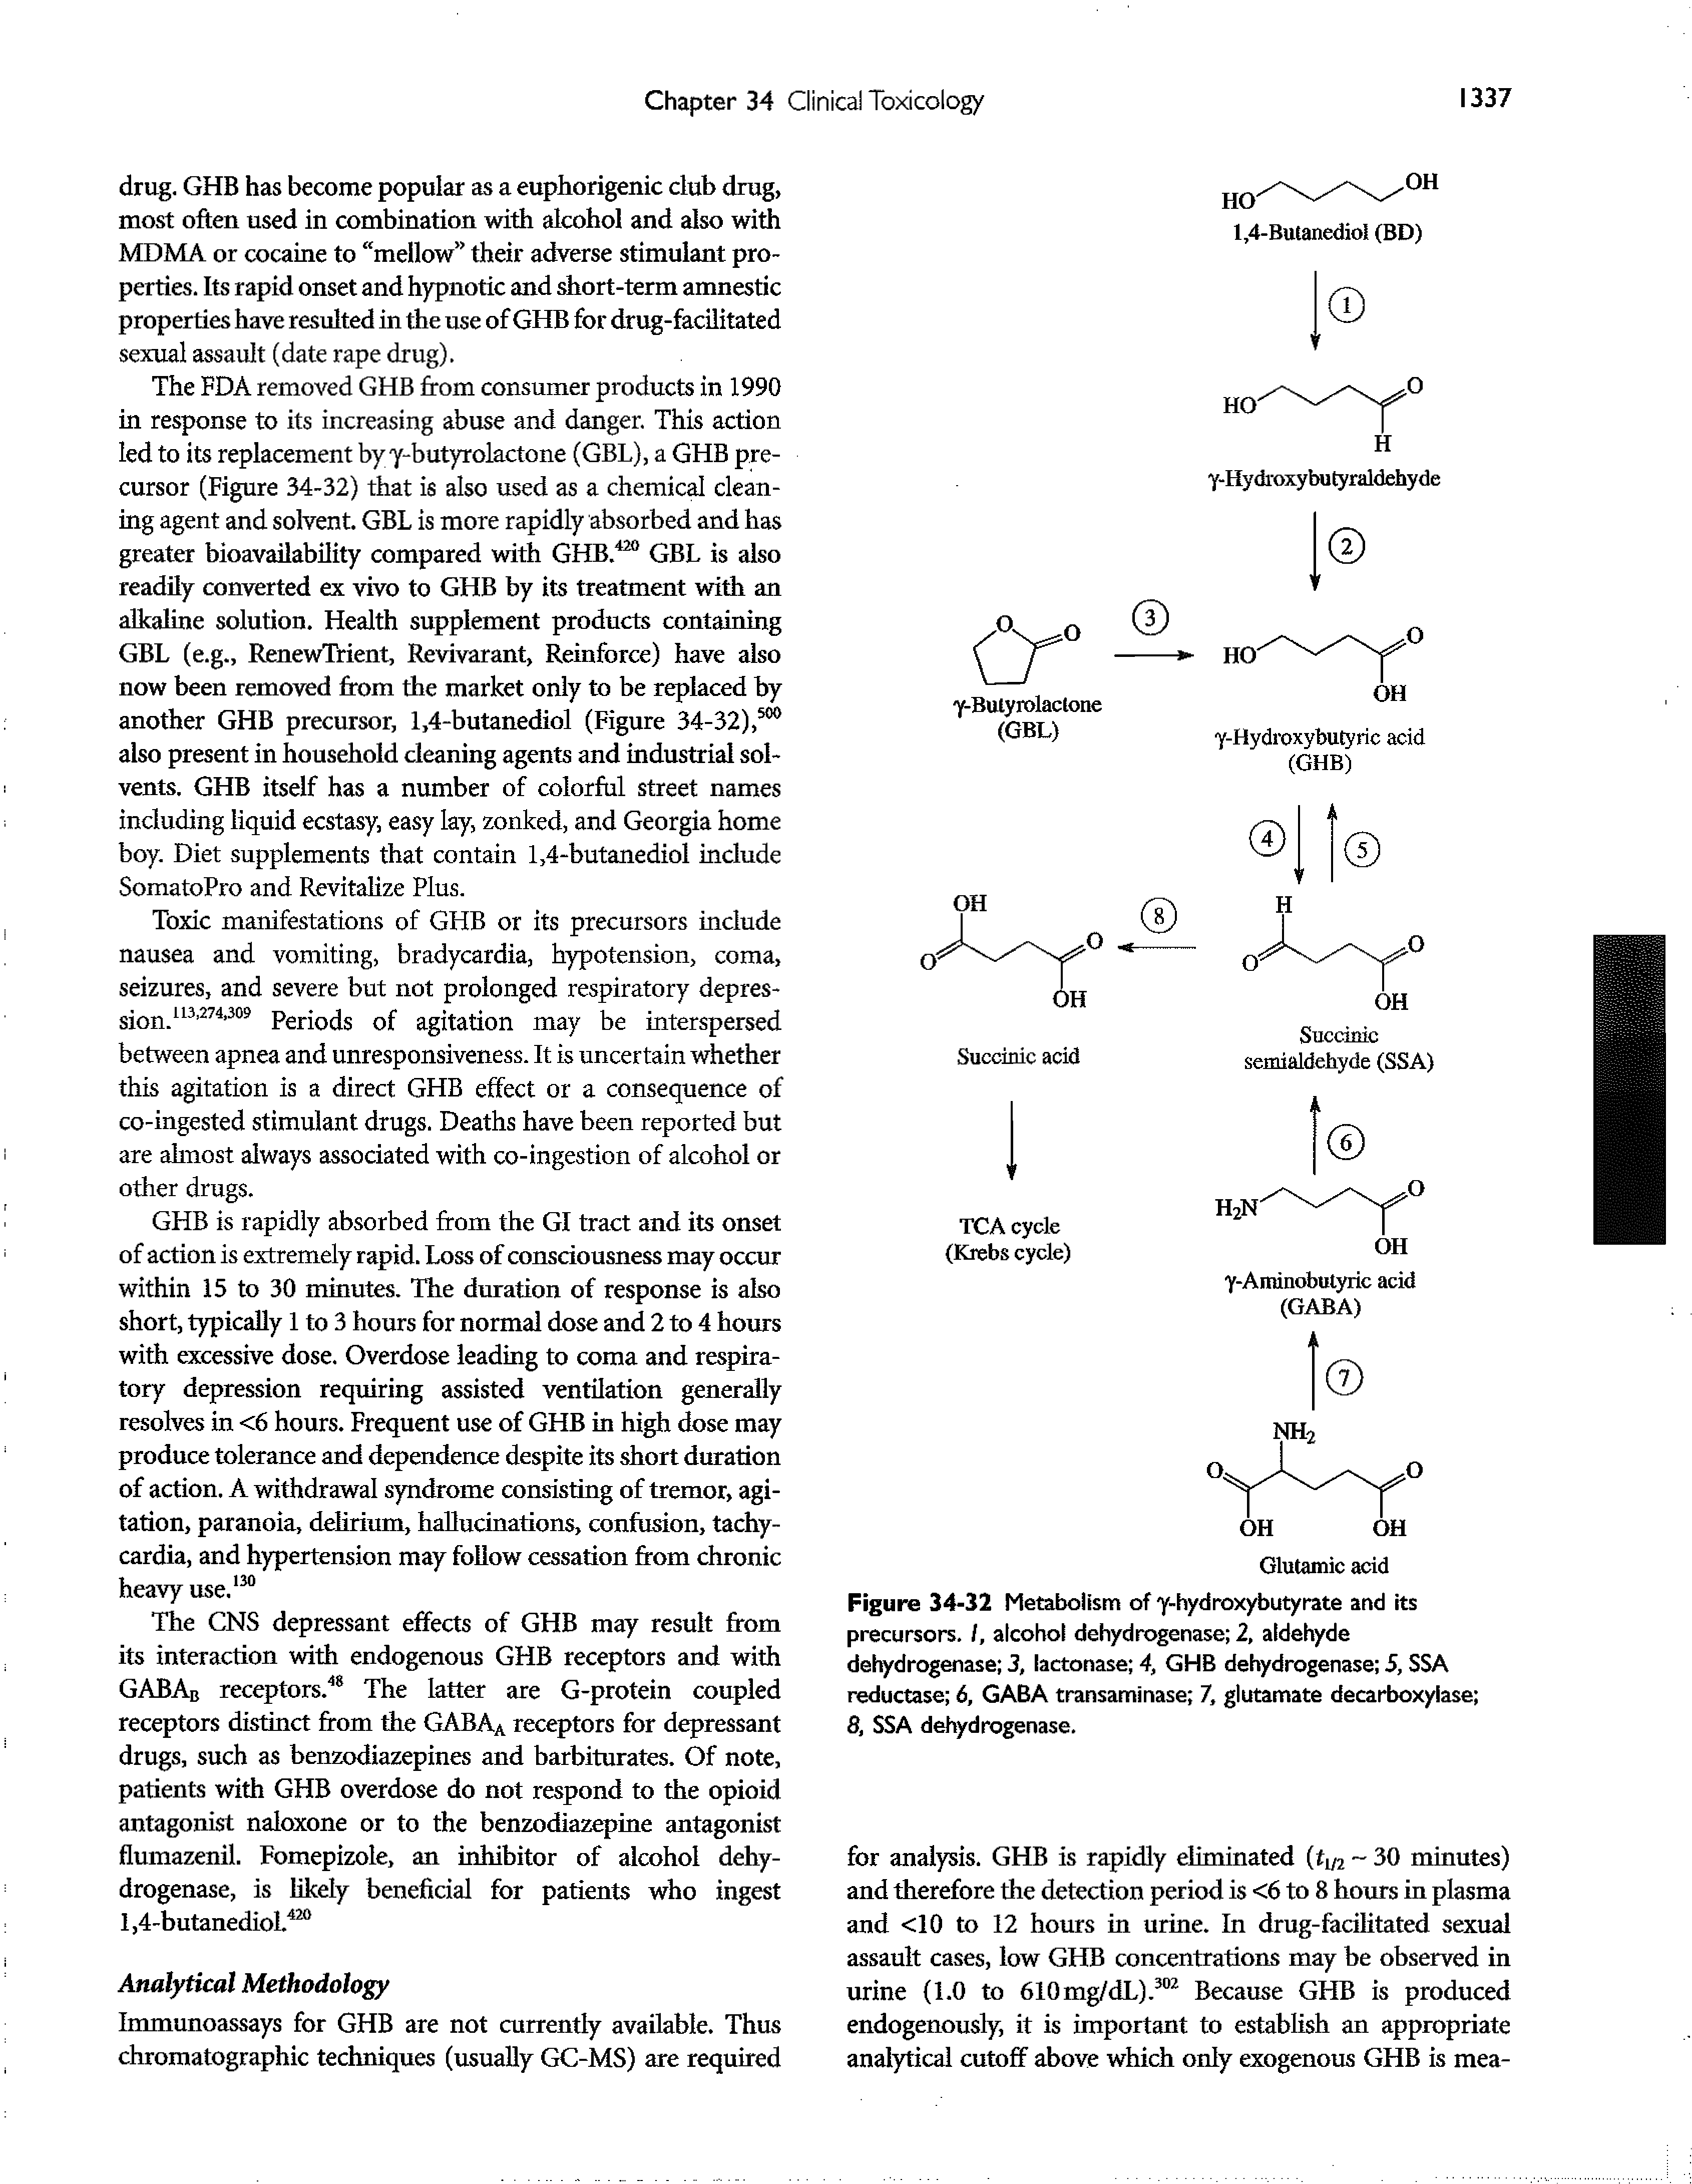 Figure 34-32 Metabolism of y-hydroxybutyrate and its precursors. /, alcohol dehydrogenase 2, aldehyde dehydrogenase 3, lactonase 4, GHB dehydrogenase J, SSA reductase 6, GABA transaminase 7, glutamate decarboxylase 8, SSA dehydrogenase.